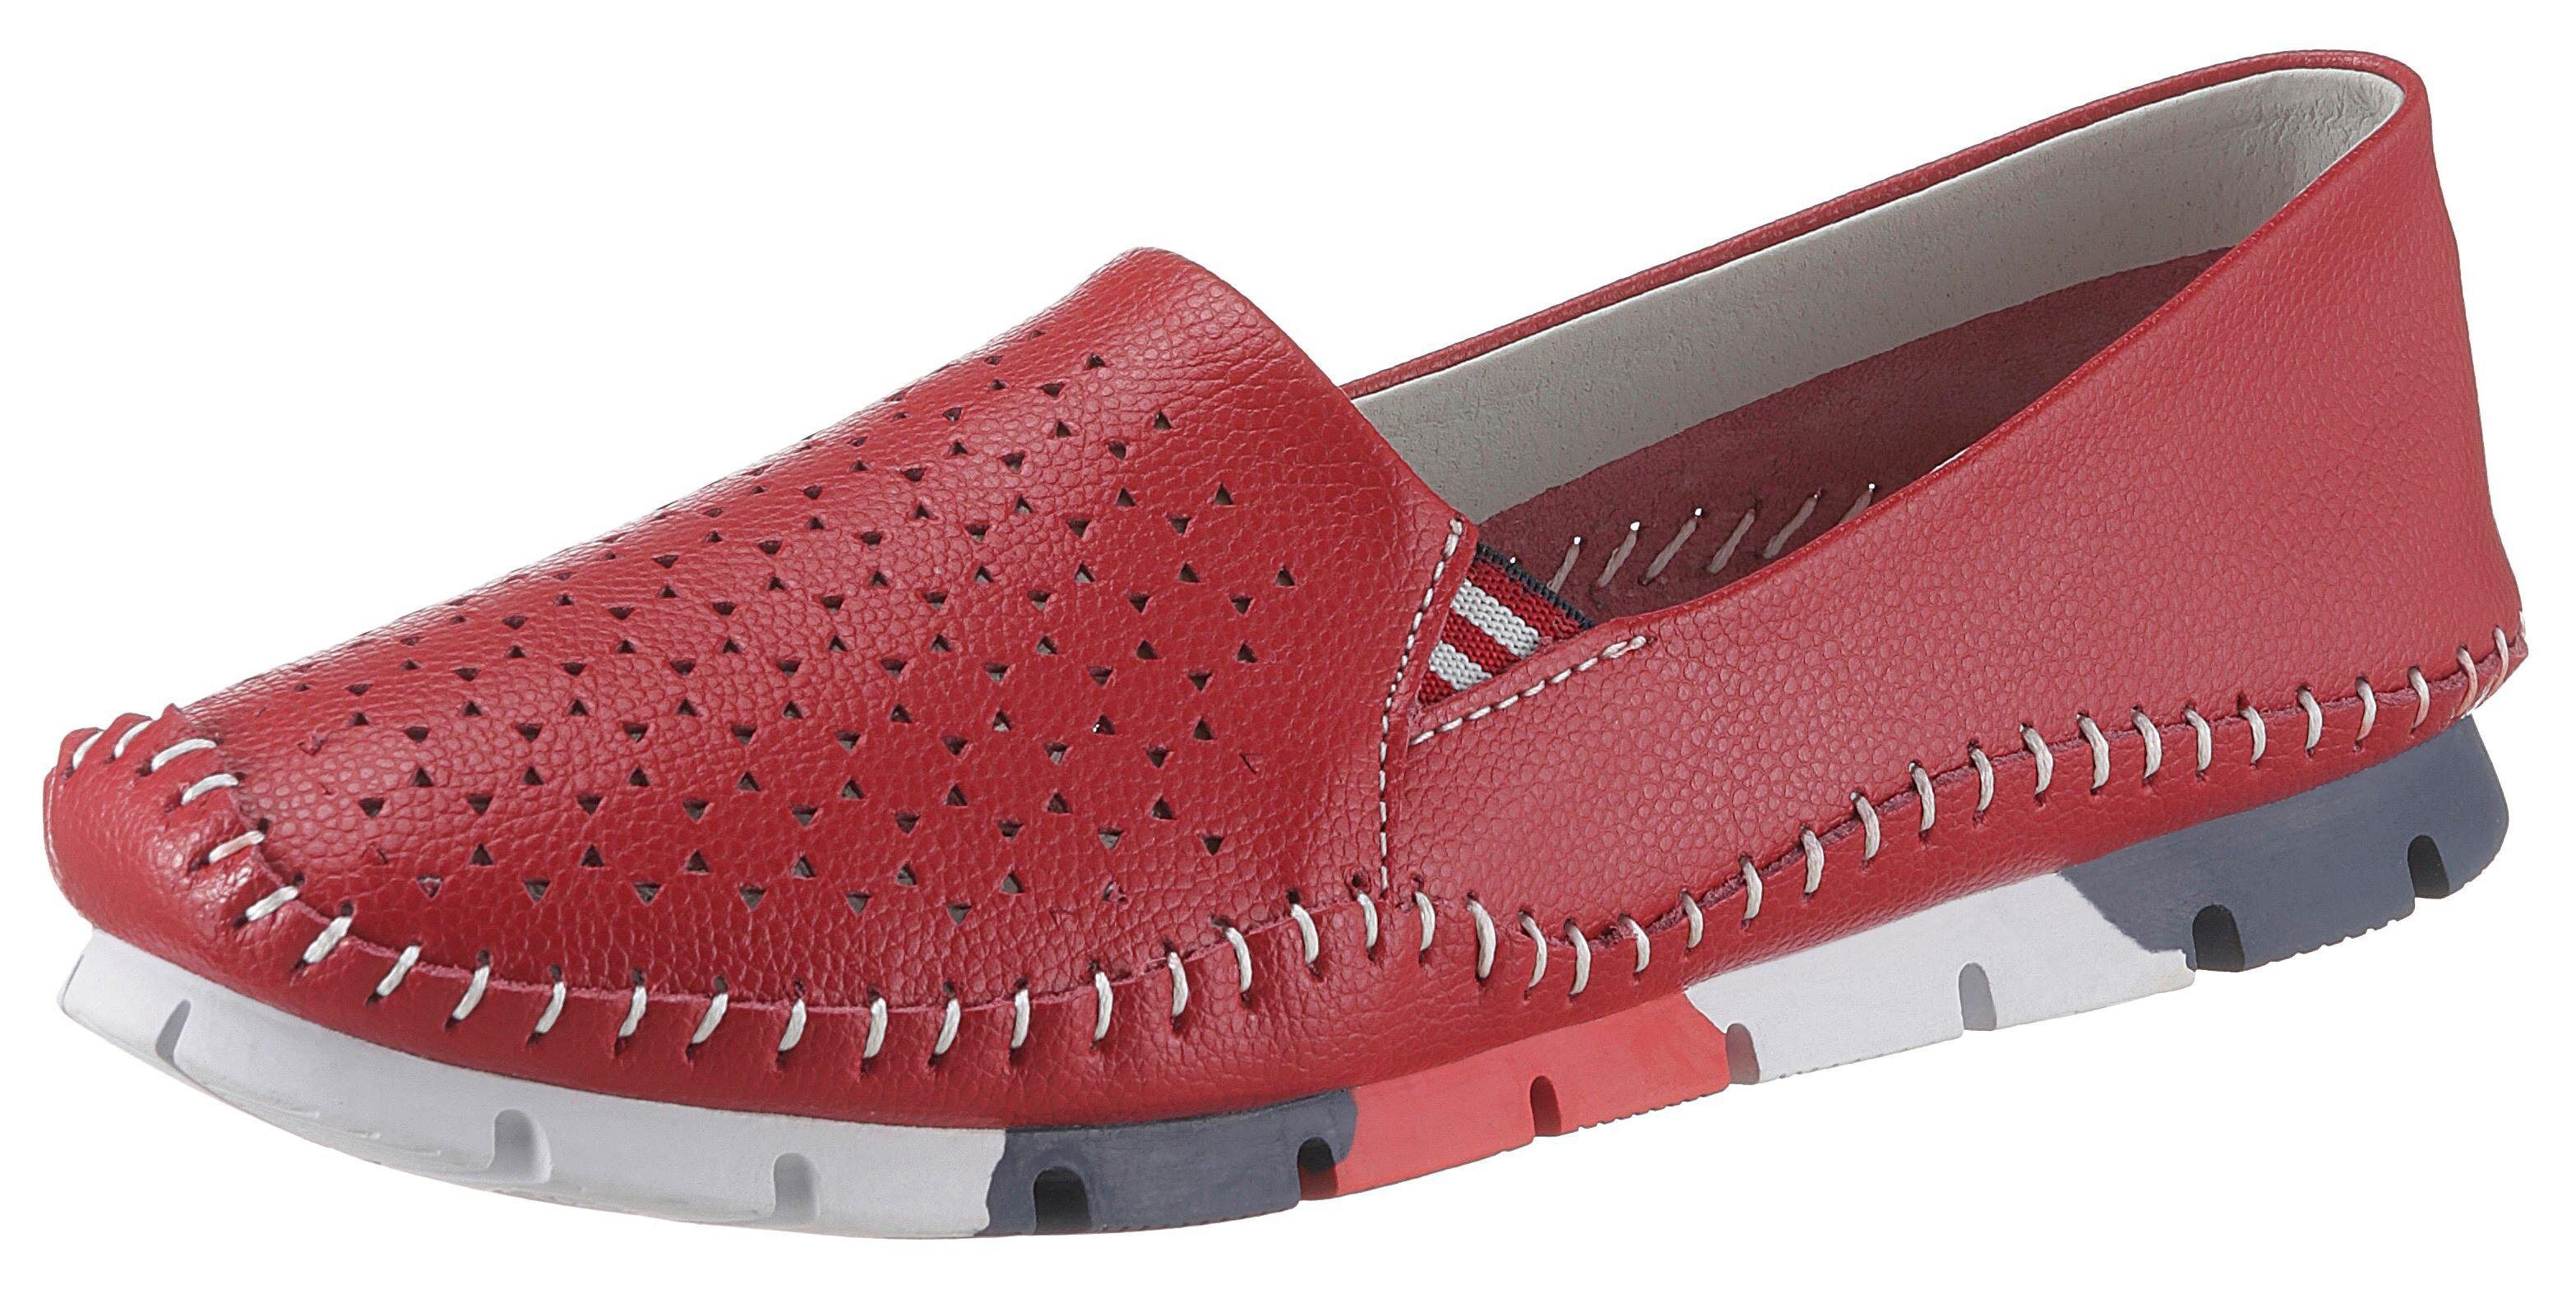 COSMOS Comfort Slipper mit bunter Laufsohle, rot